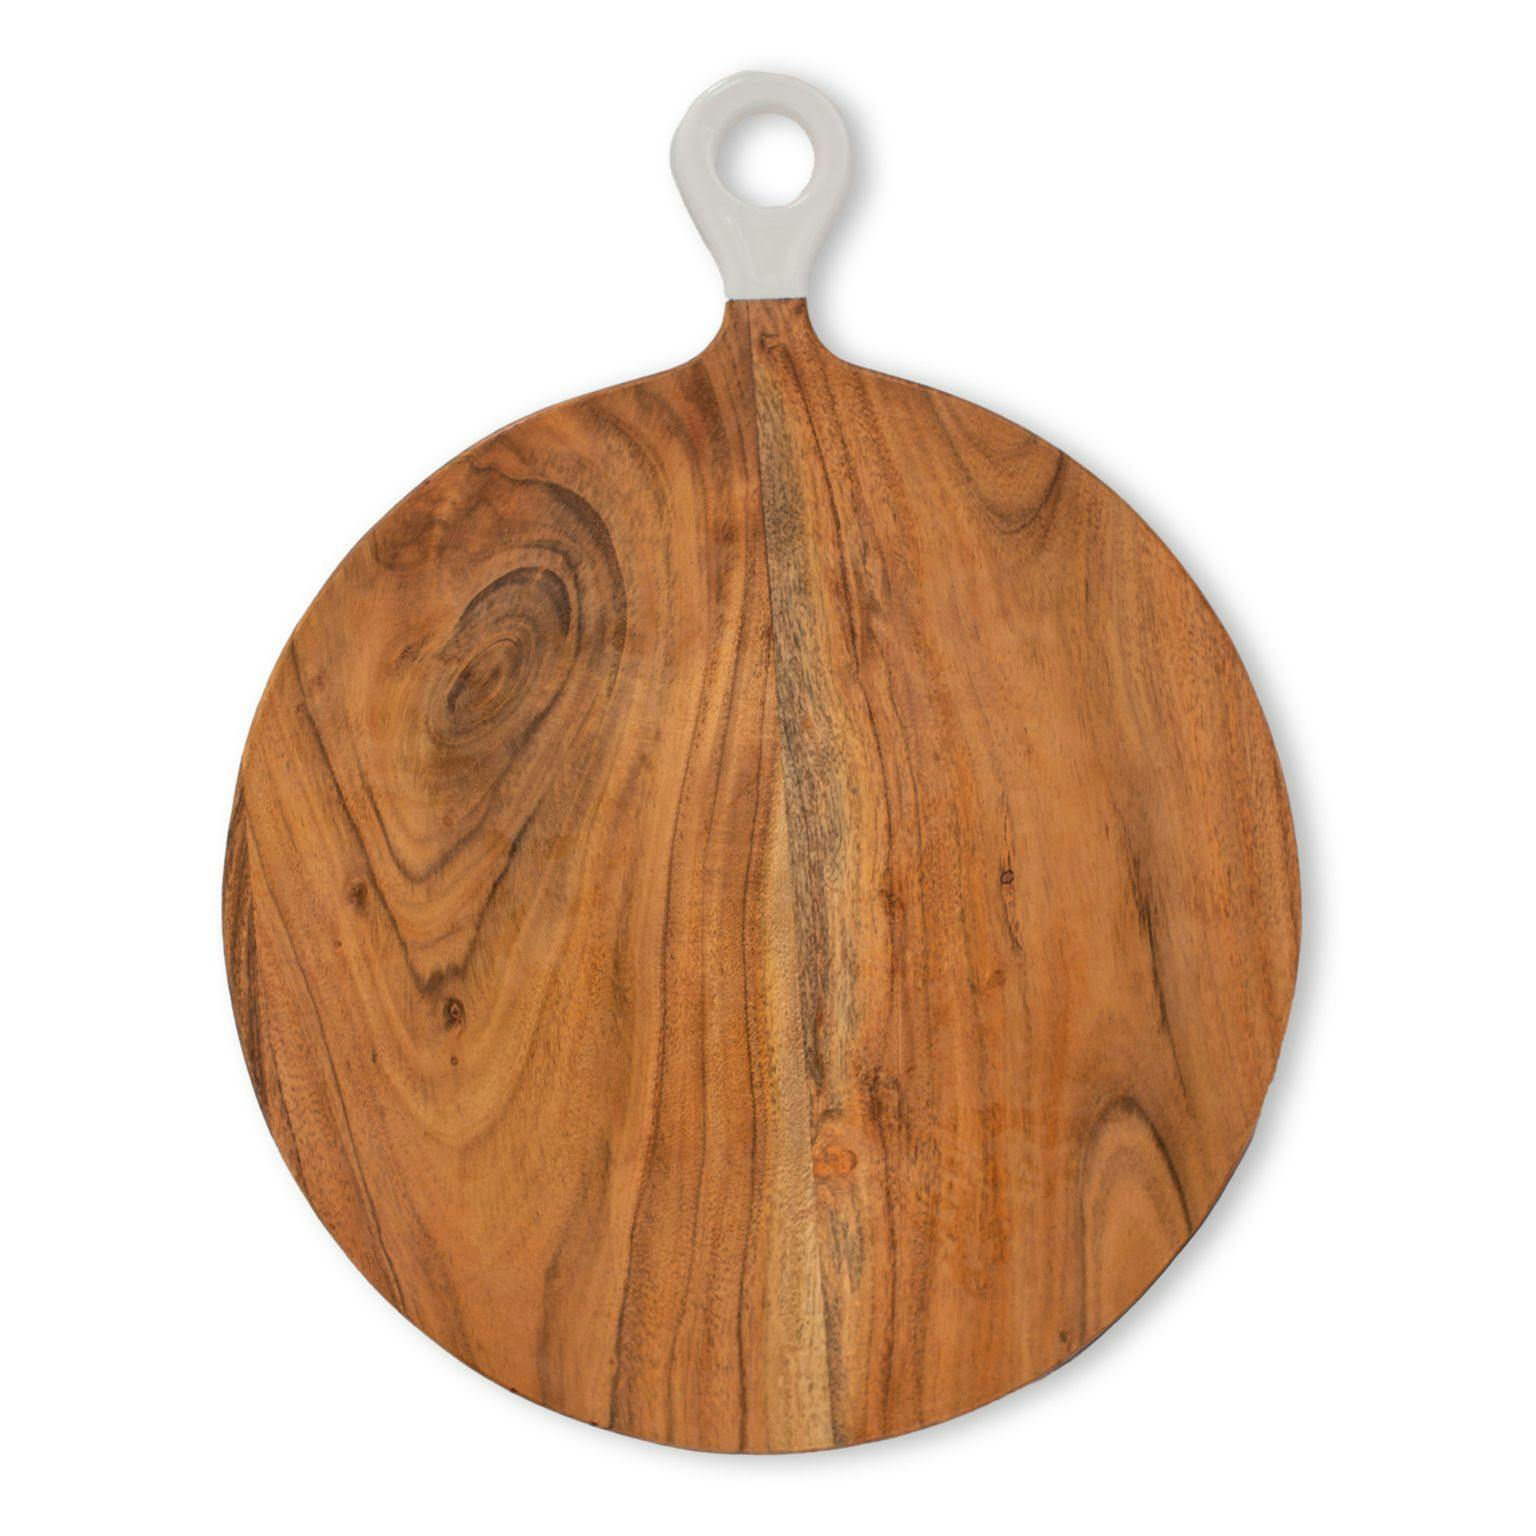 Viking 7-Piece Acacia Wood Slate Cheese Board Set – Viking Culinary Products